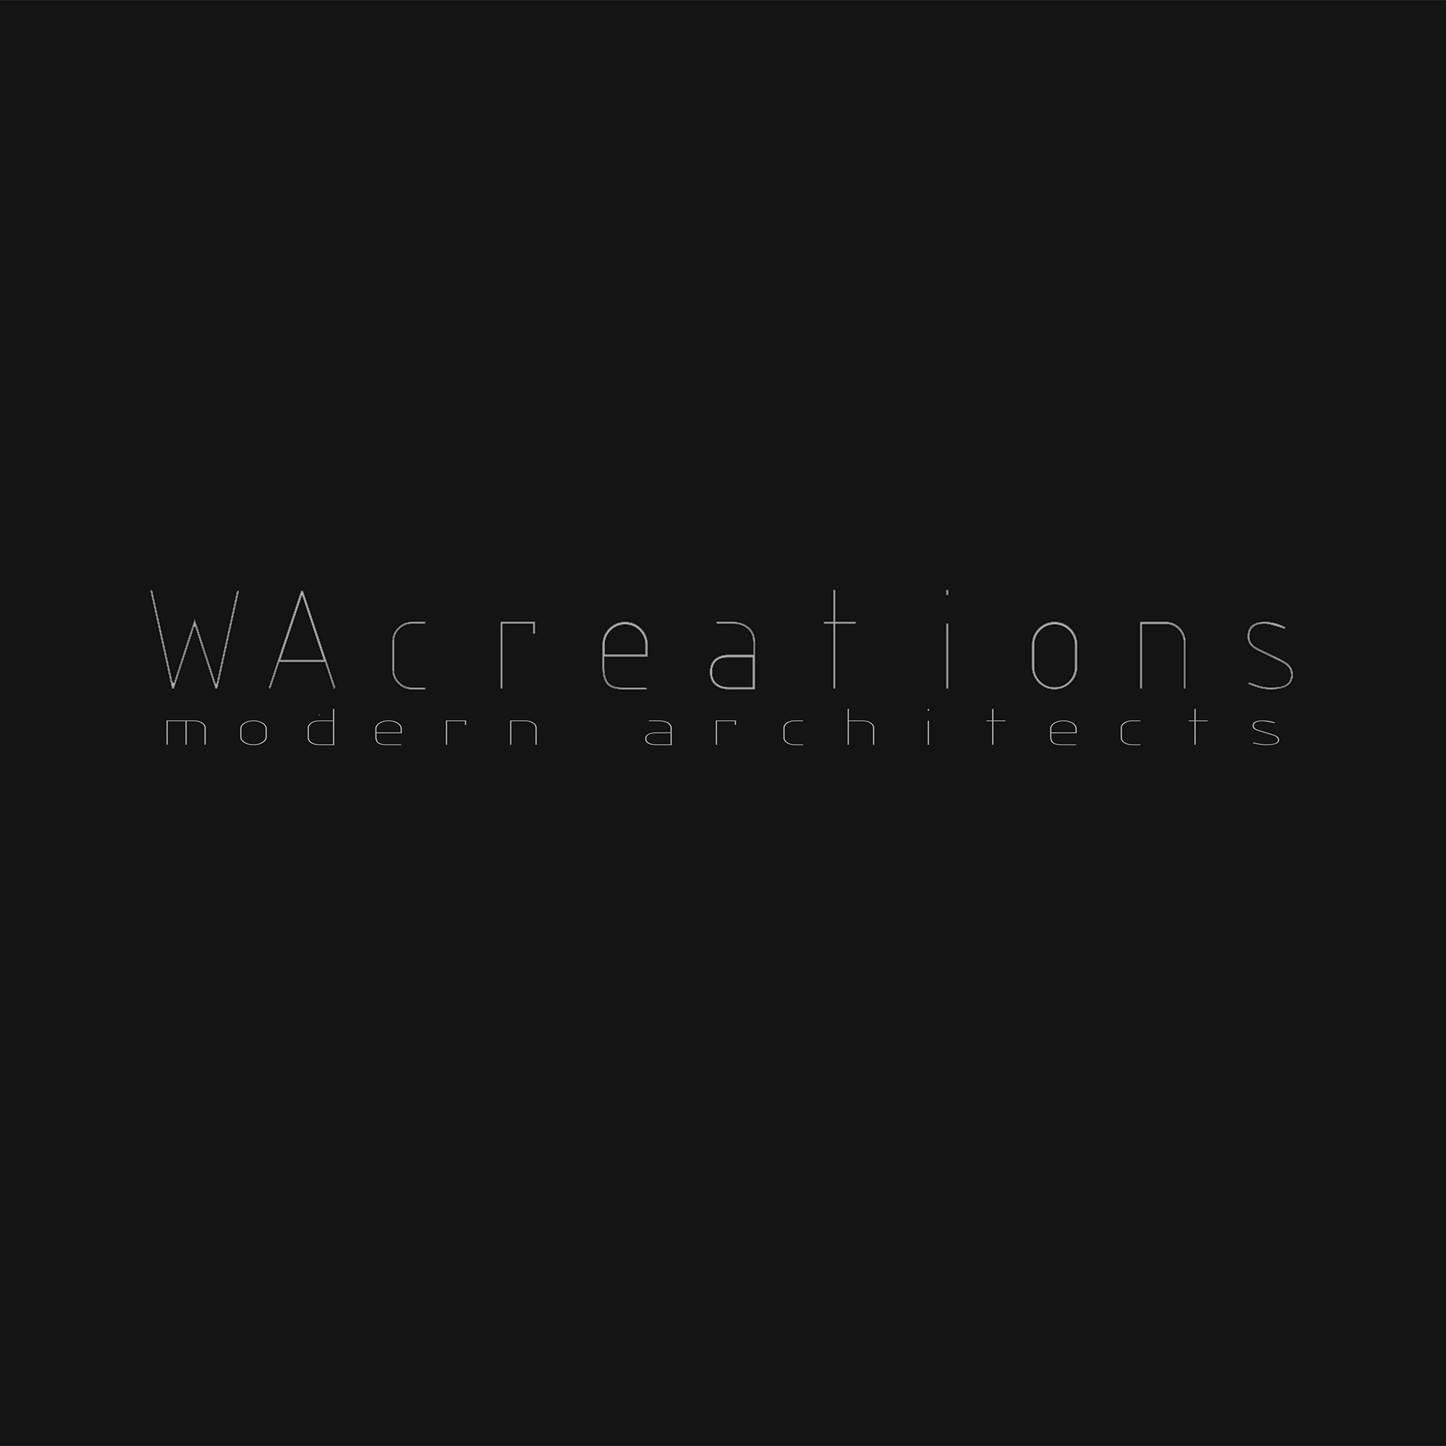 WAcreations|Architect|Professional Services